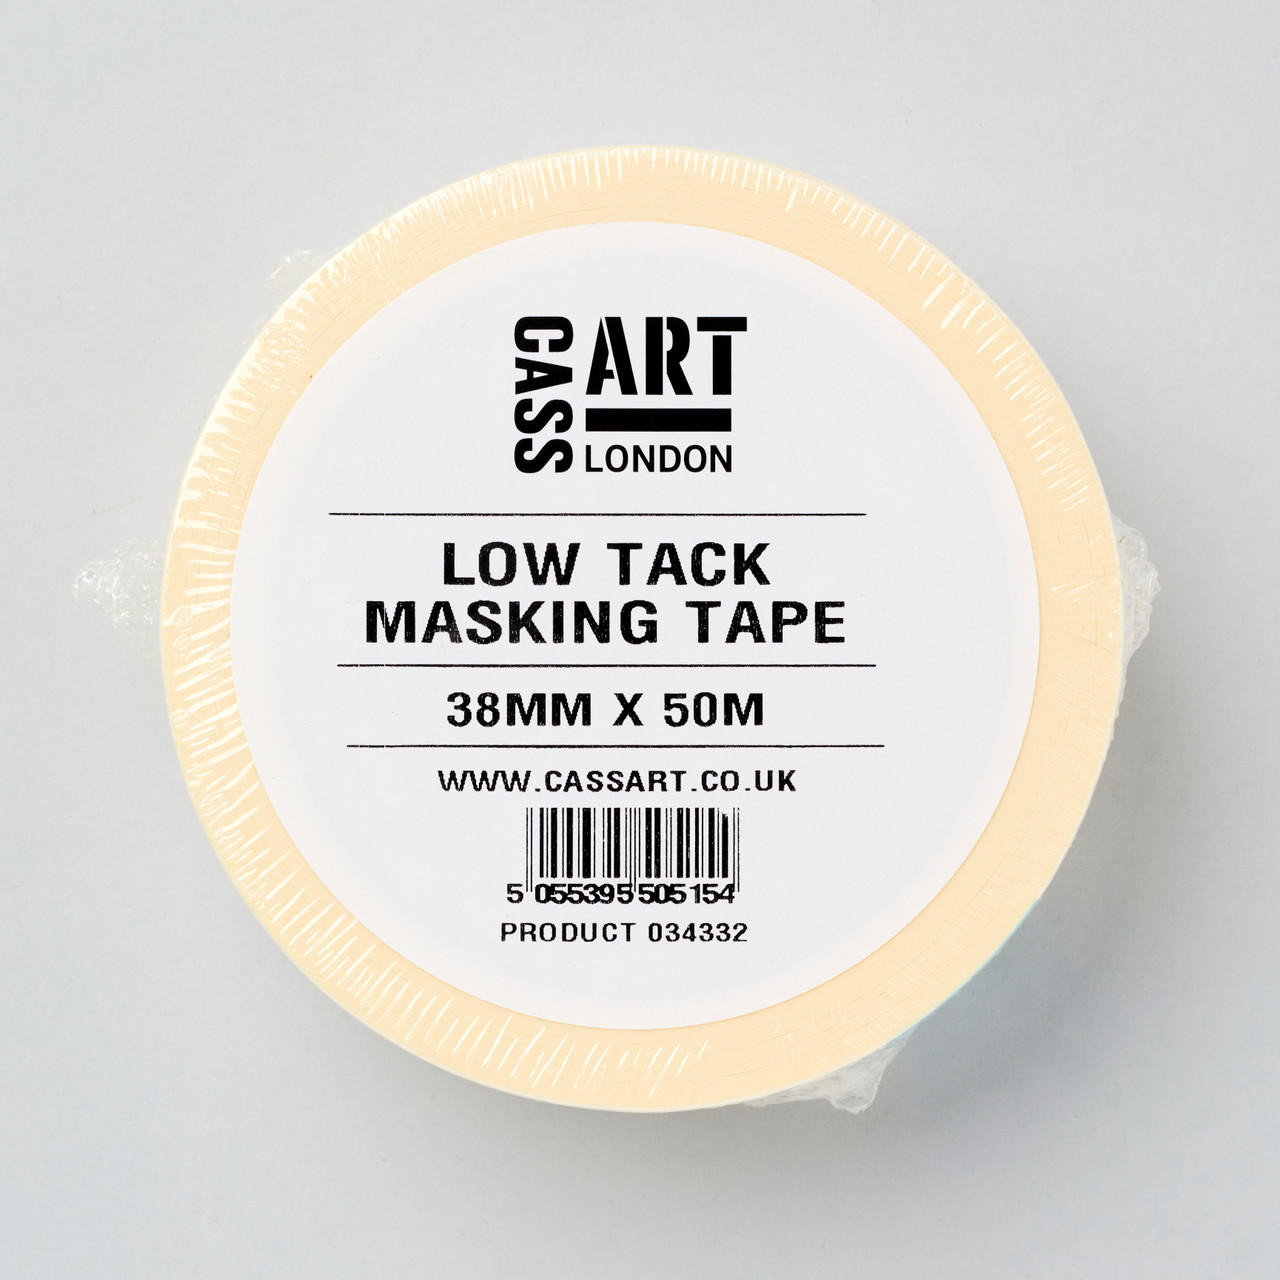 Cass Art Low Tack Masking Tape 38mm x 50m